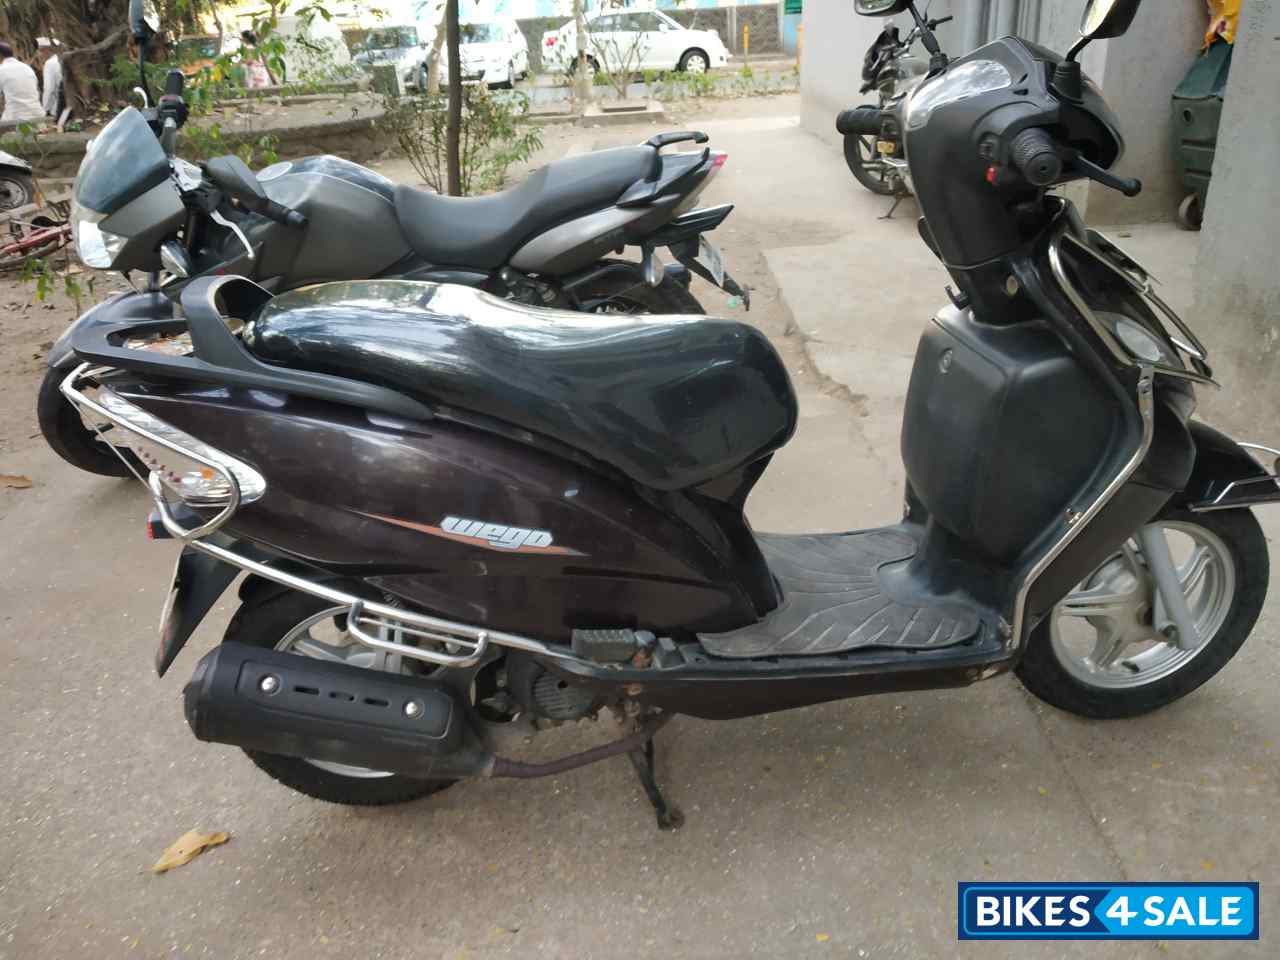 Used 2011 model TVS Wego for sale in Mumbai. ID 298192 - Bikes4Sale